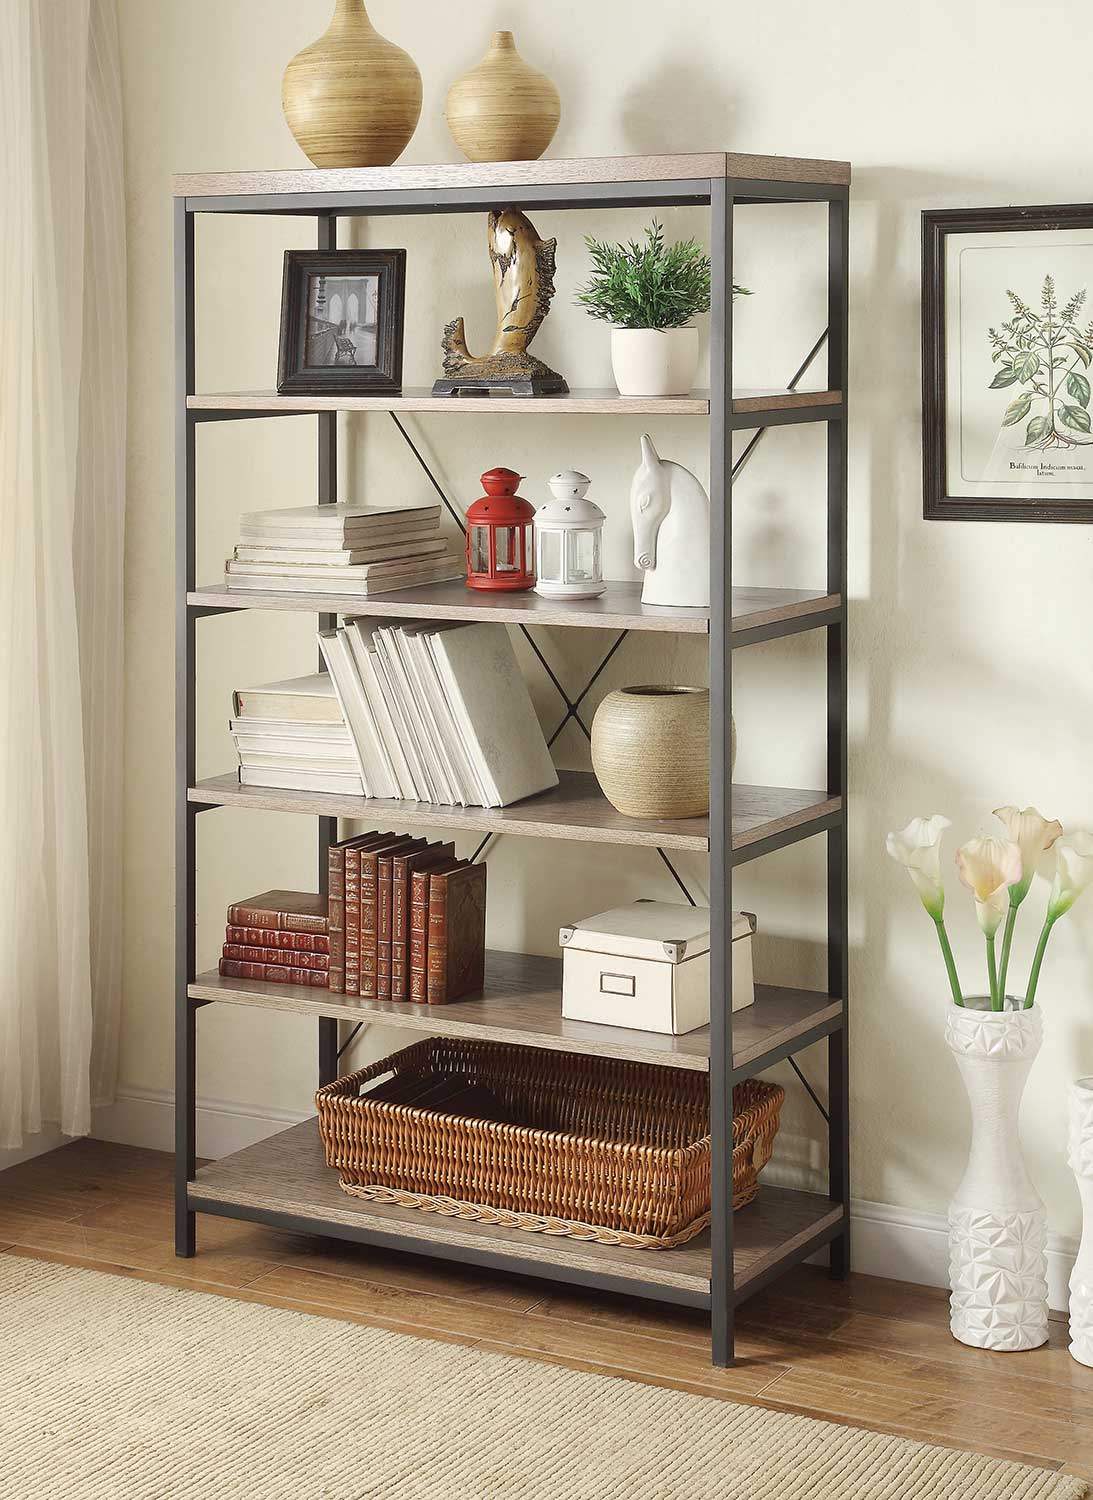 Homelegance Daria 40in Bookcase - Weathered Wood Top with Metal Framing